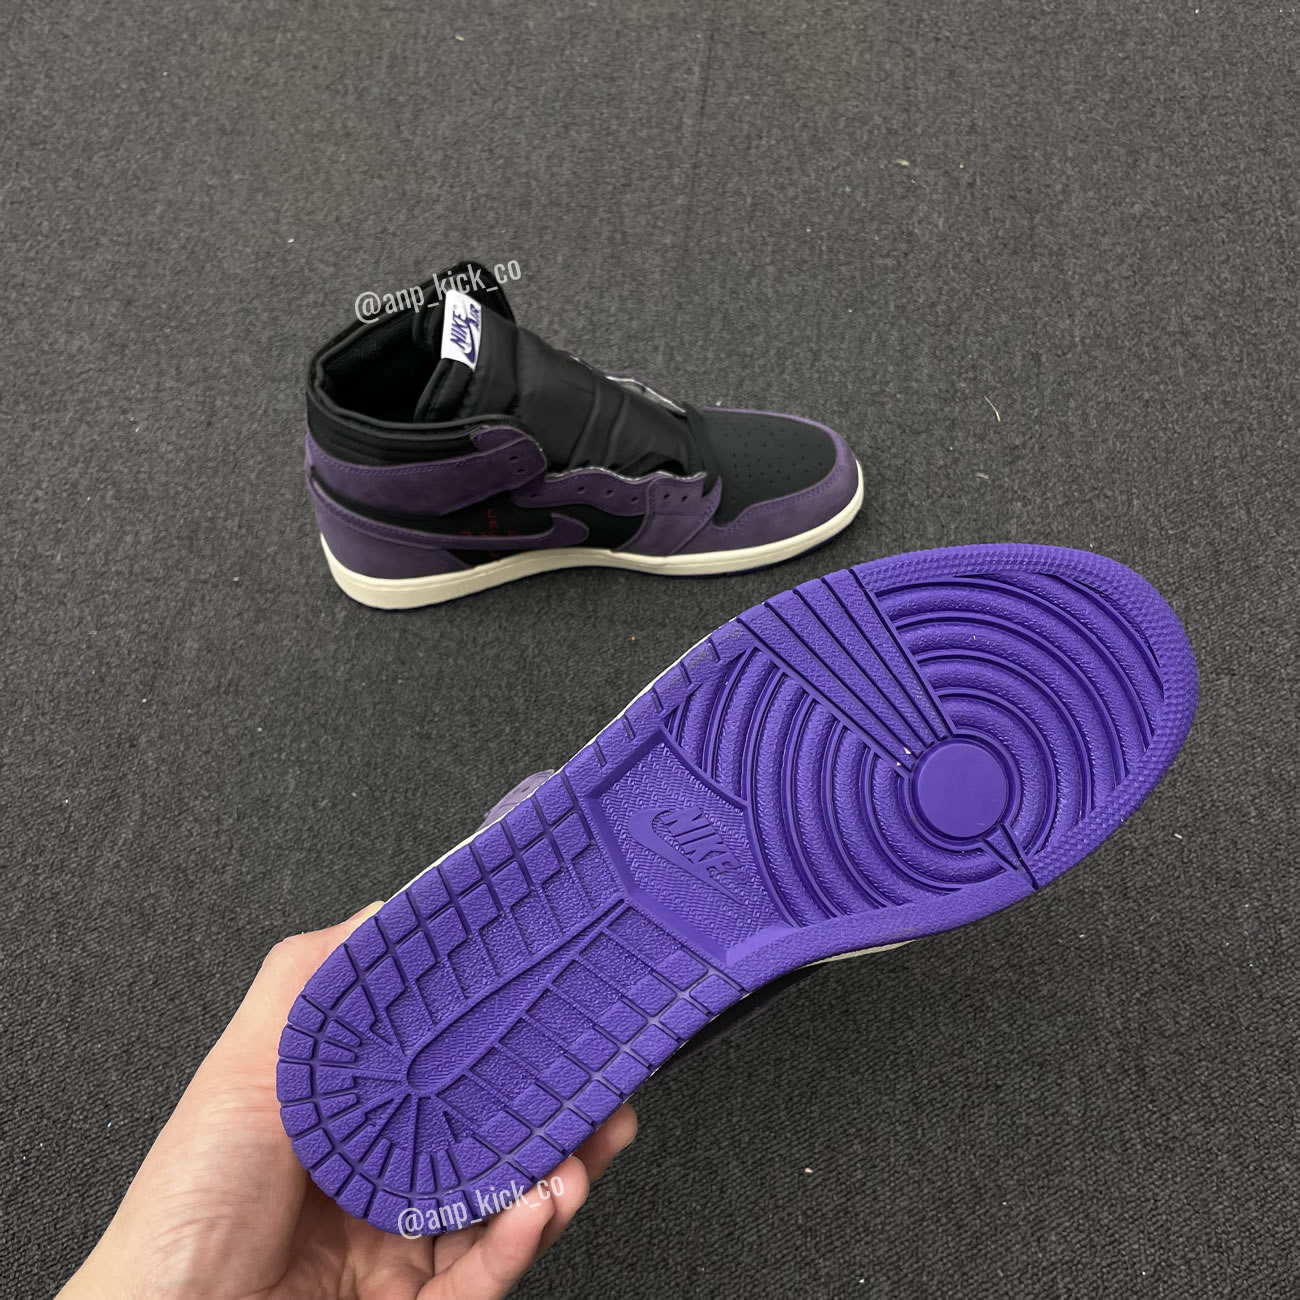 Travis Scott x Air Jordan 1 High OG SP "Purple/Black" Custom Making